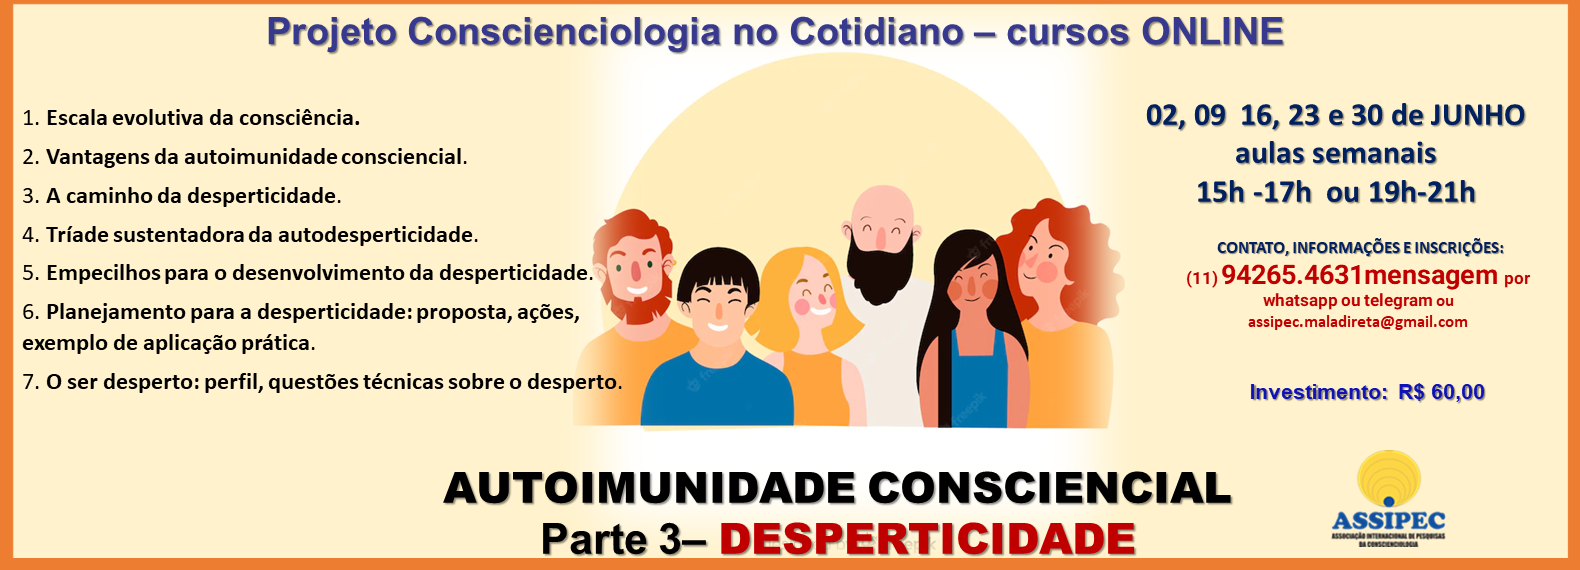 site CCIOLOGIA COTIDIANO JUNHO